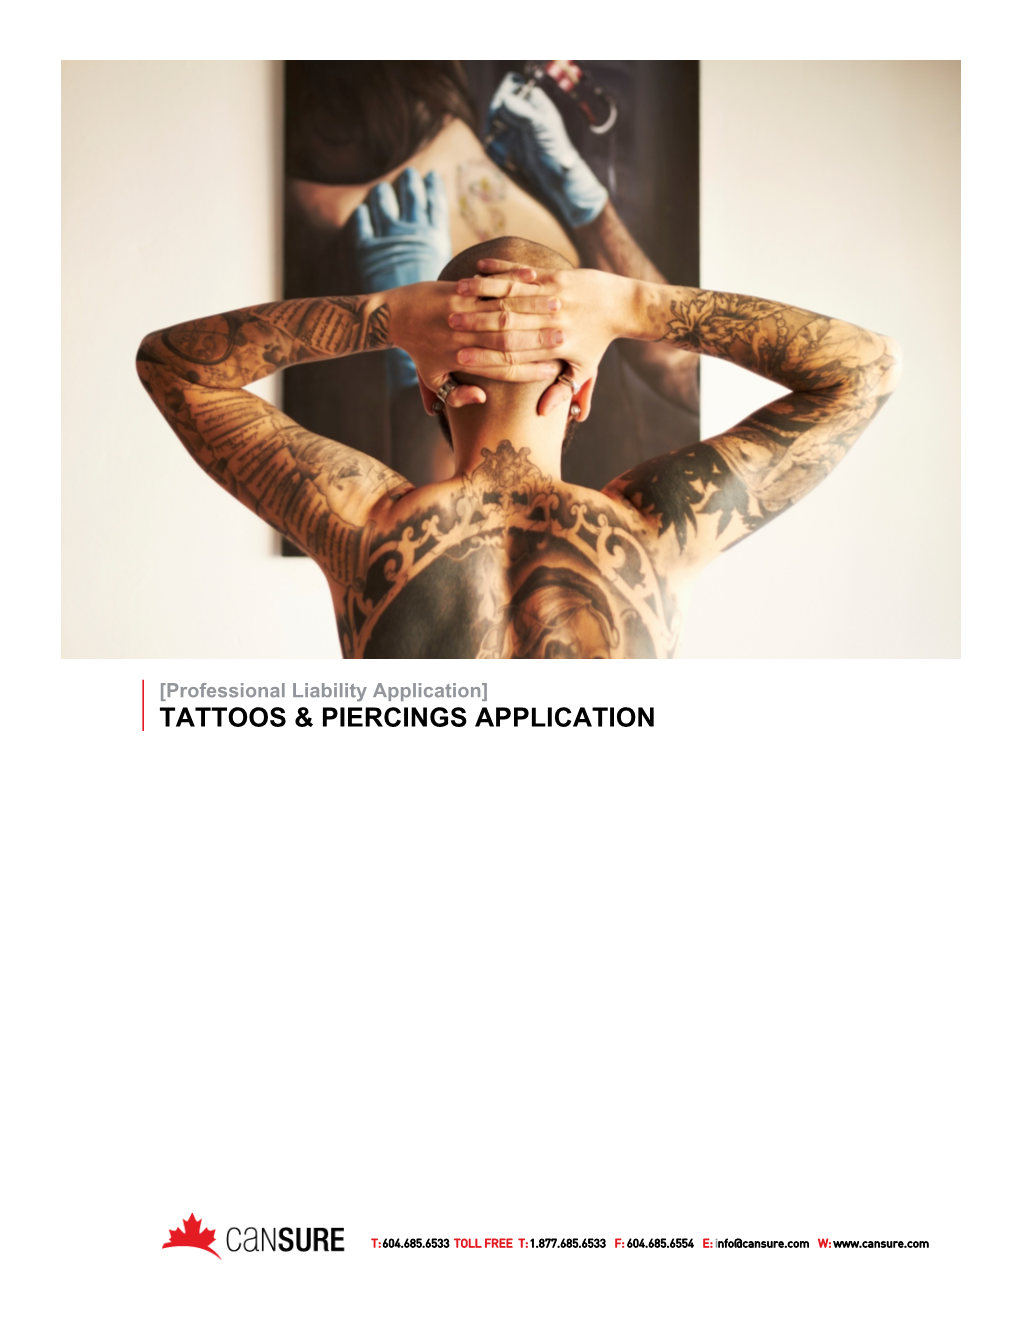 Body Piercing & Tattoo Liability Insurance Application